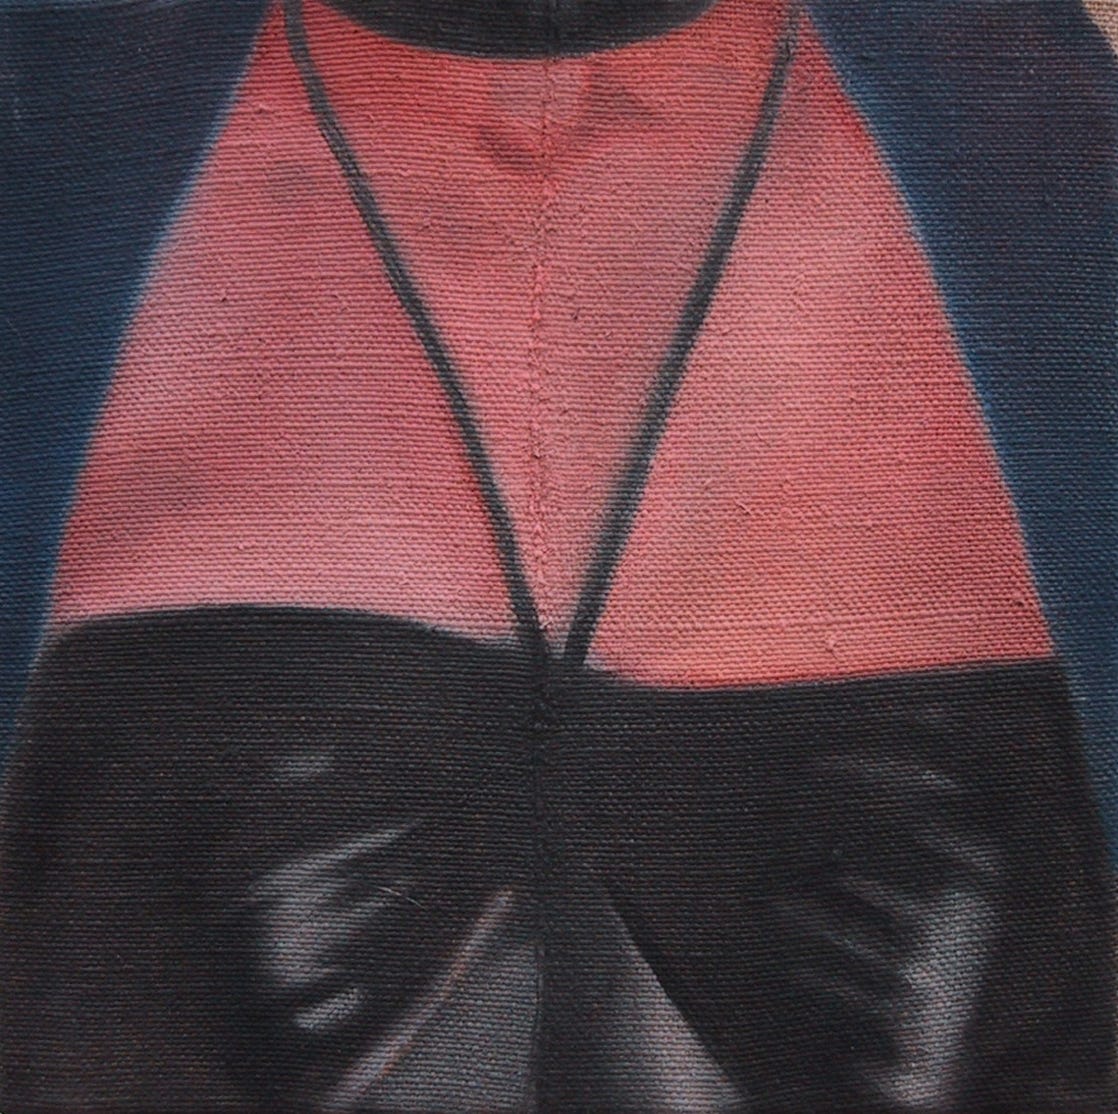 25x25 cm, oil on canvas, 2001